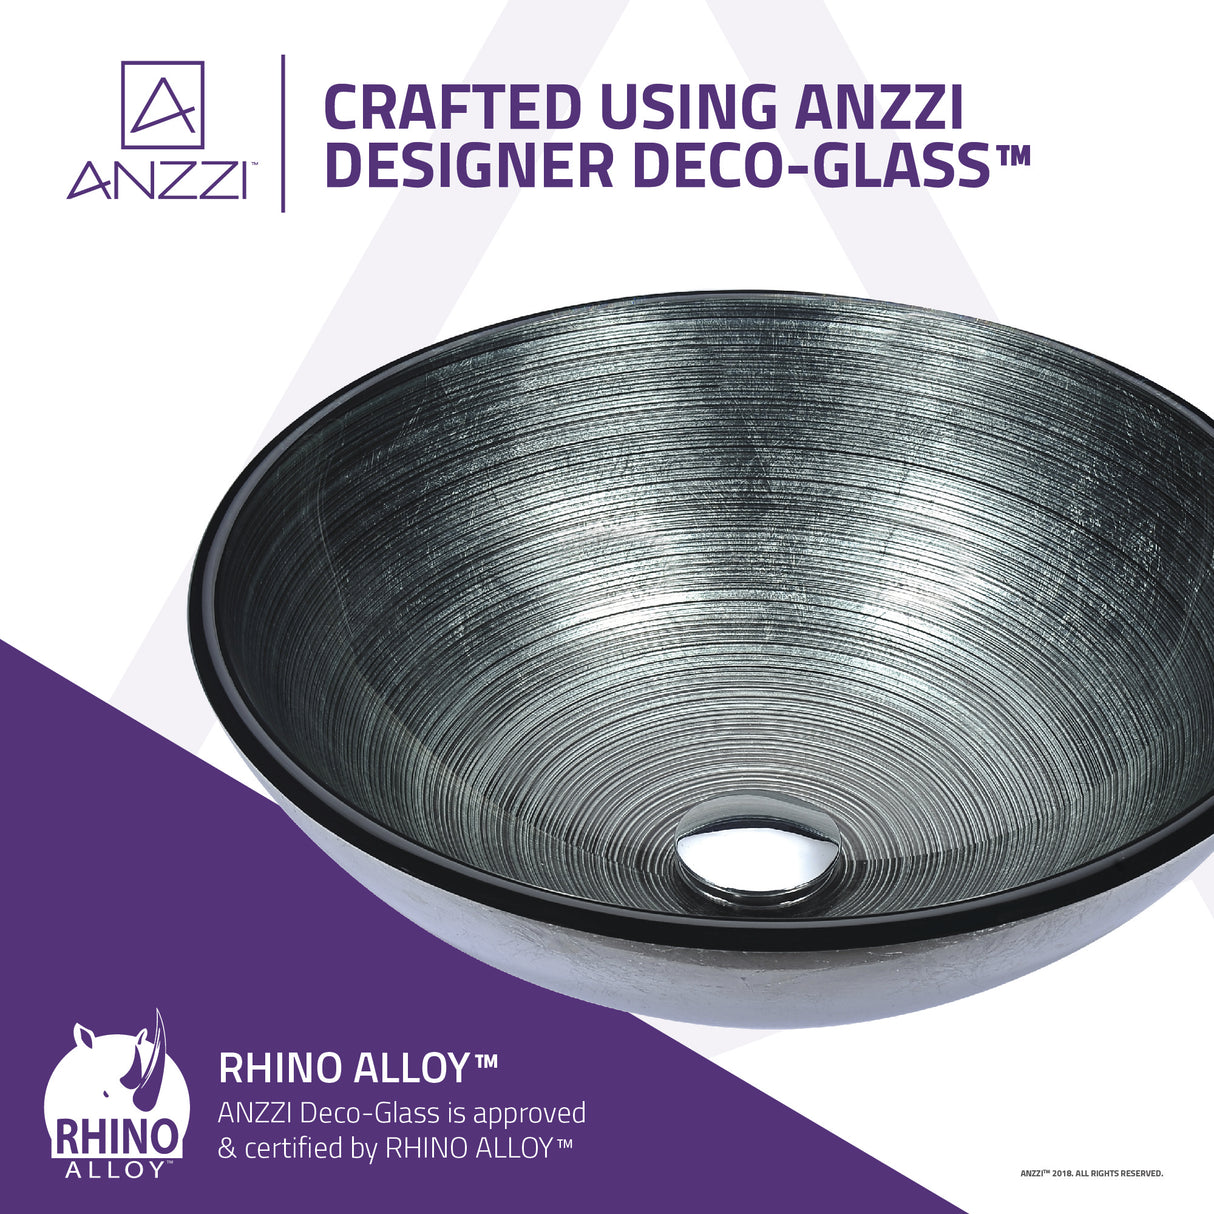 ANZZI LS-AZ285 Posh Series Deco-Glass Vessel Sink in Brushed Silver